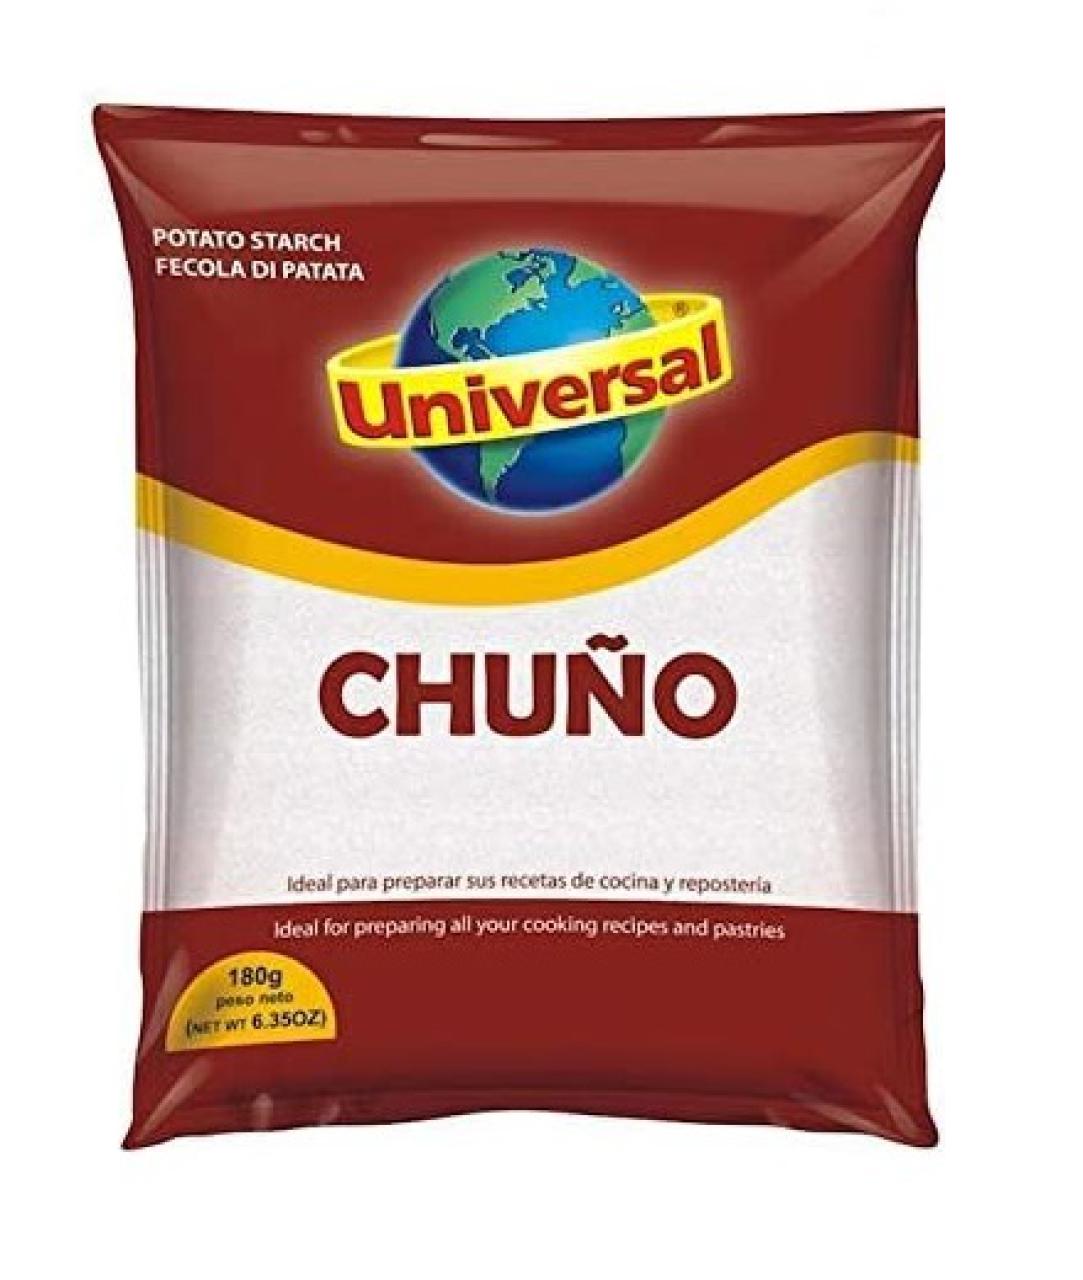 Universal chuno